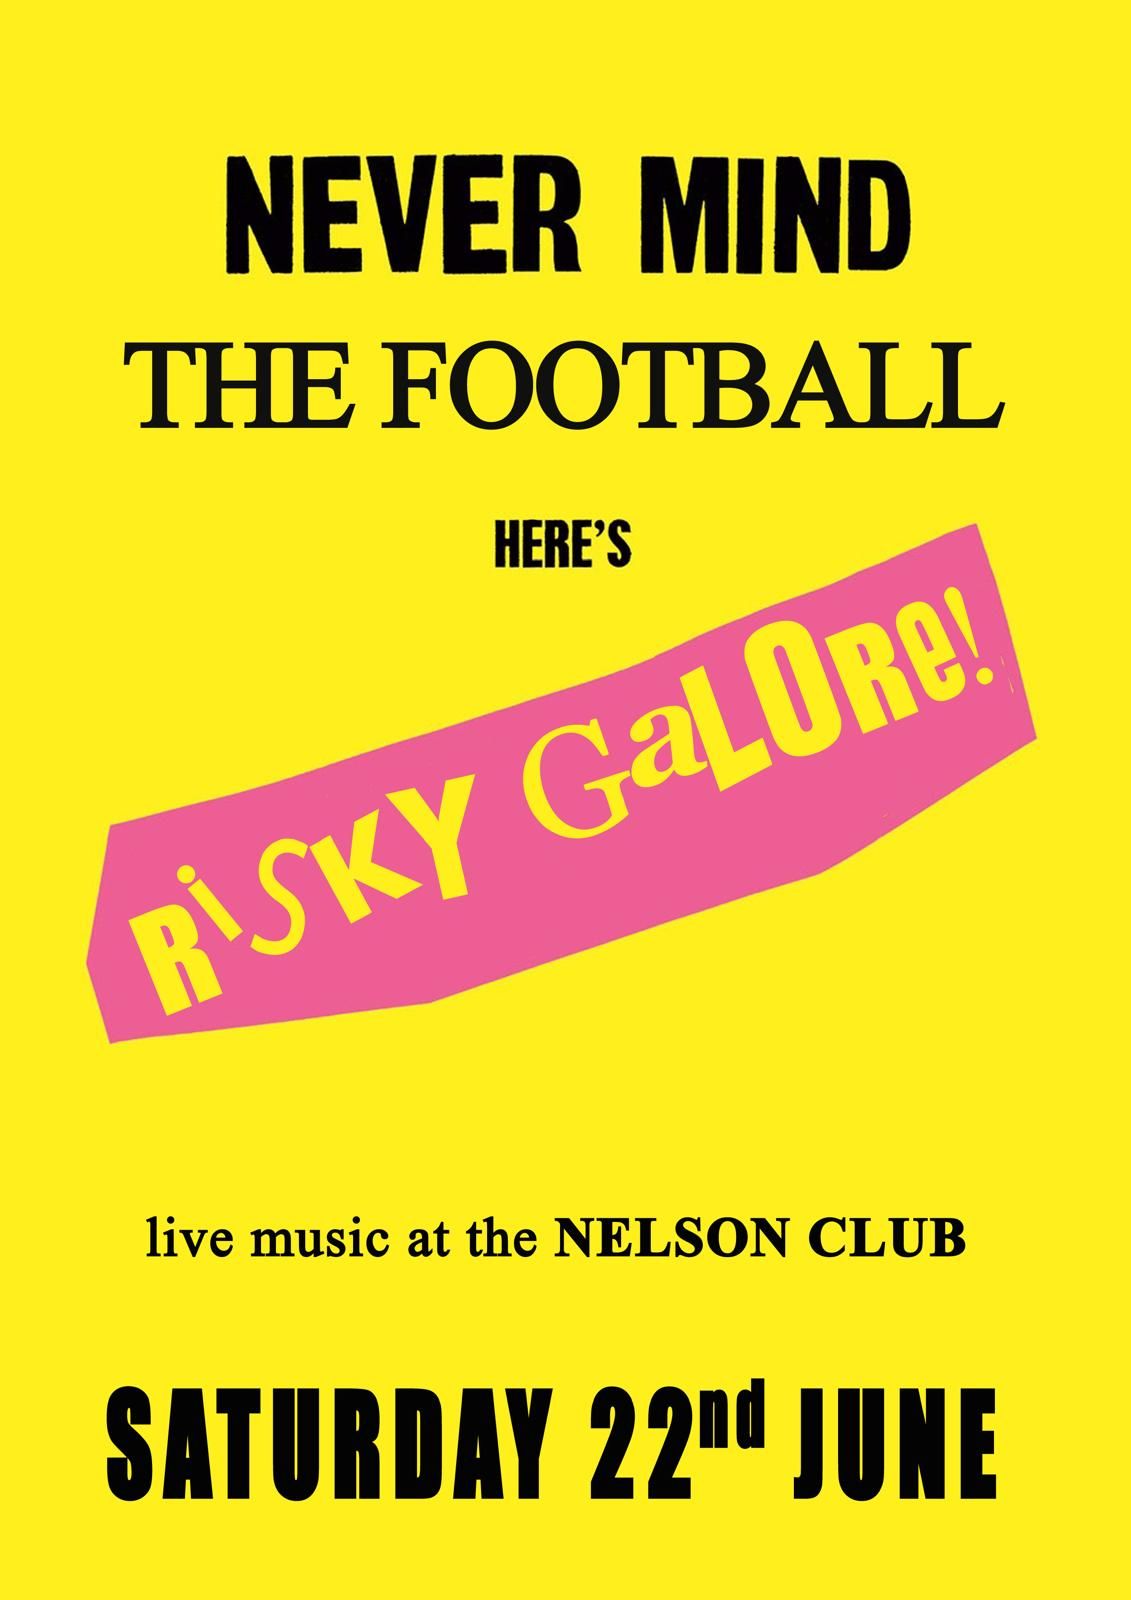 Risky Galore live! Nelson Club, Warwick